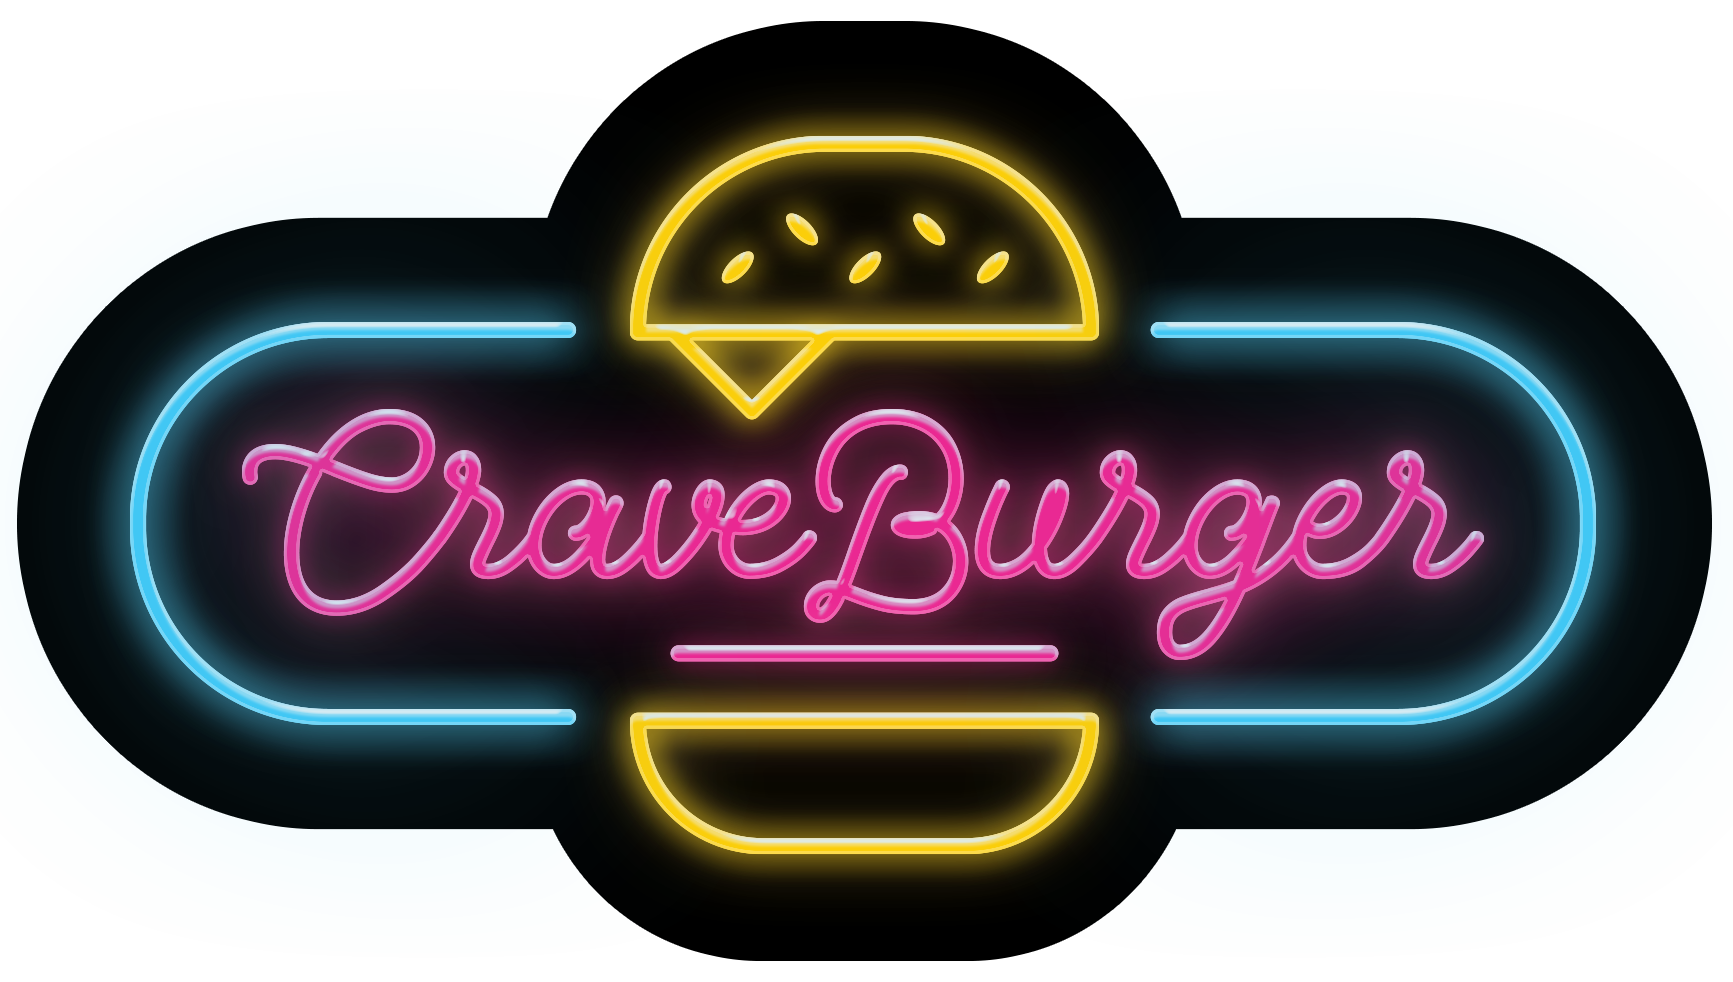 Craveburger logo